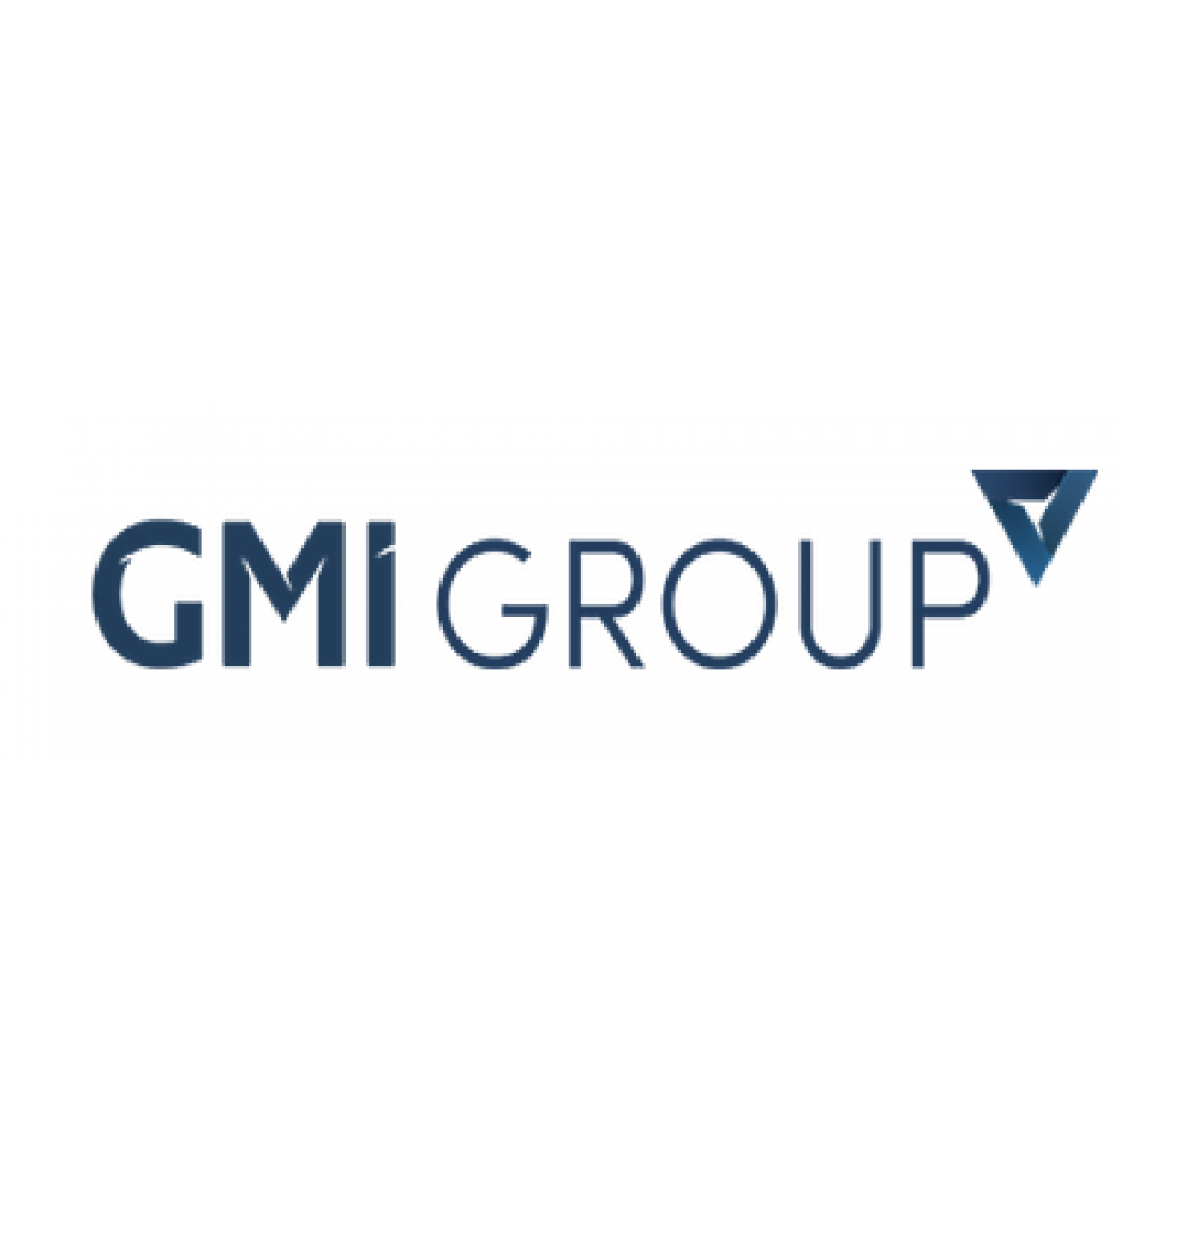 Egmi Group